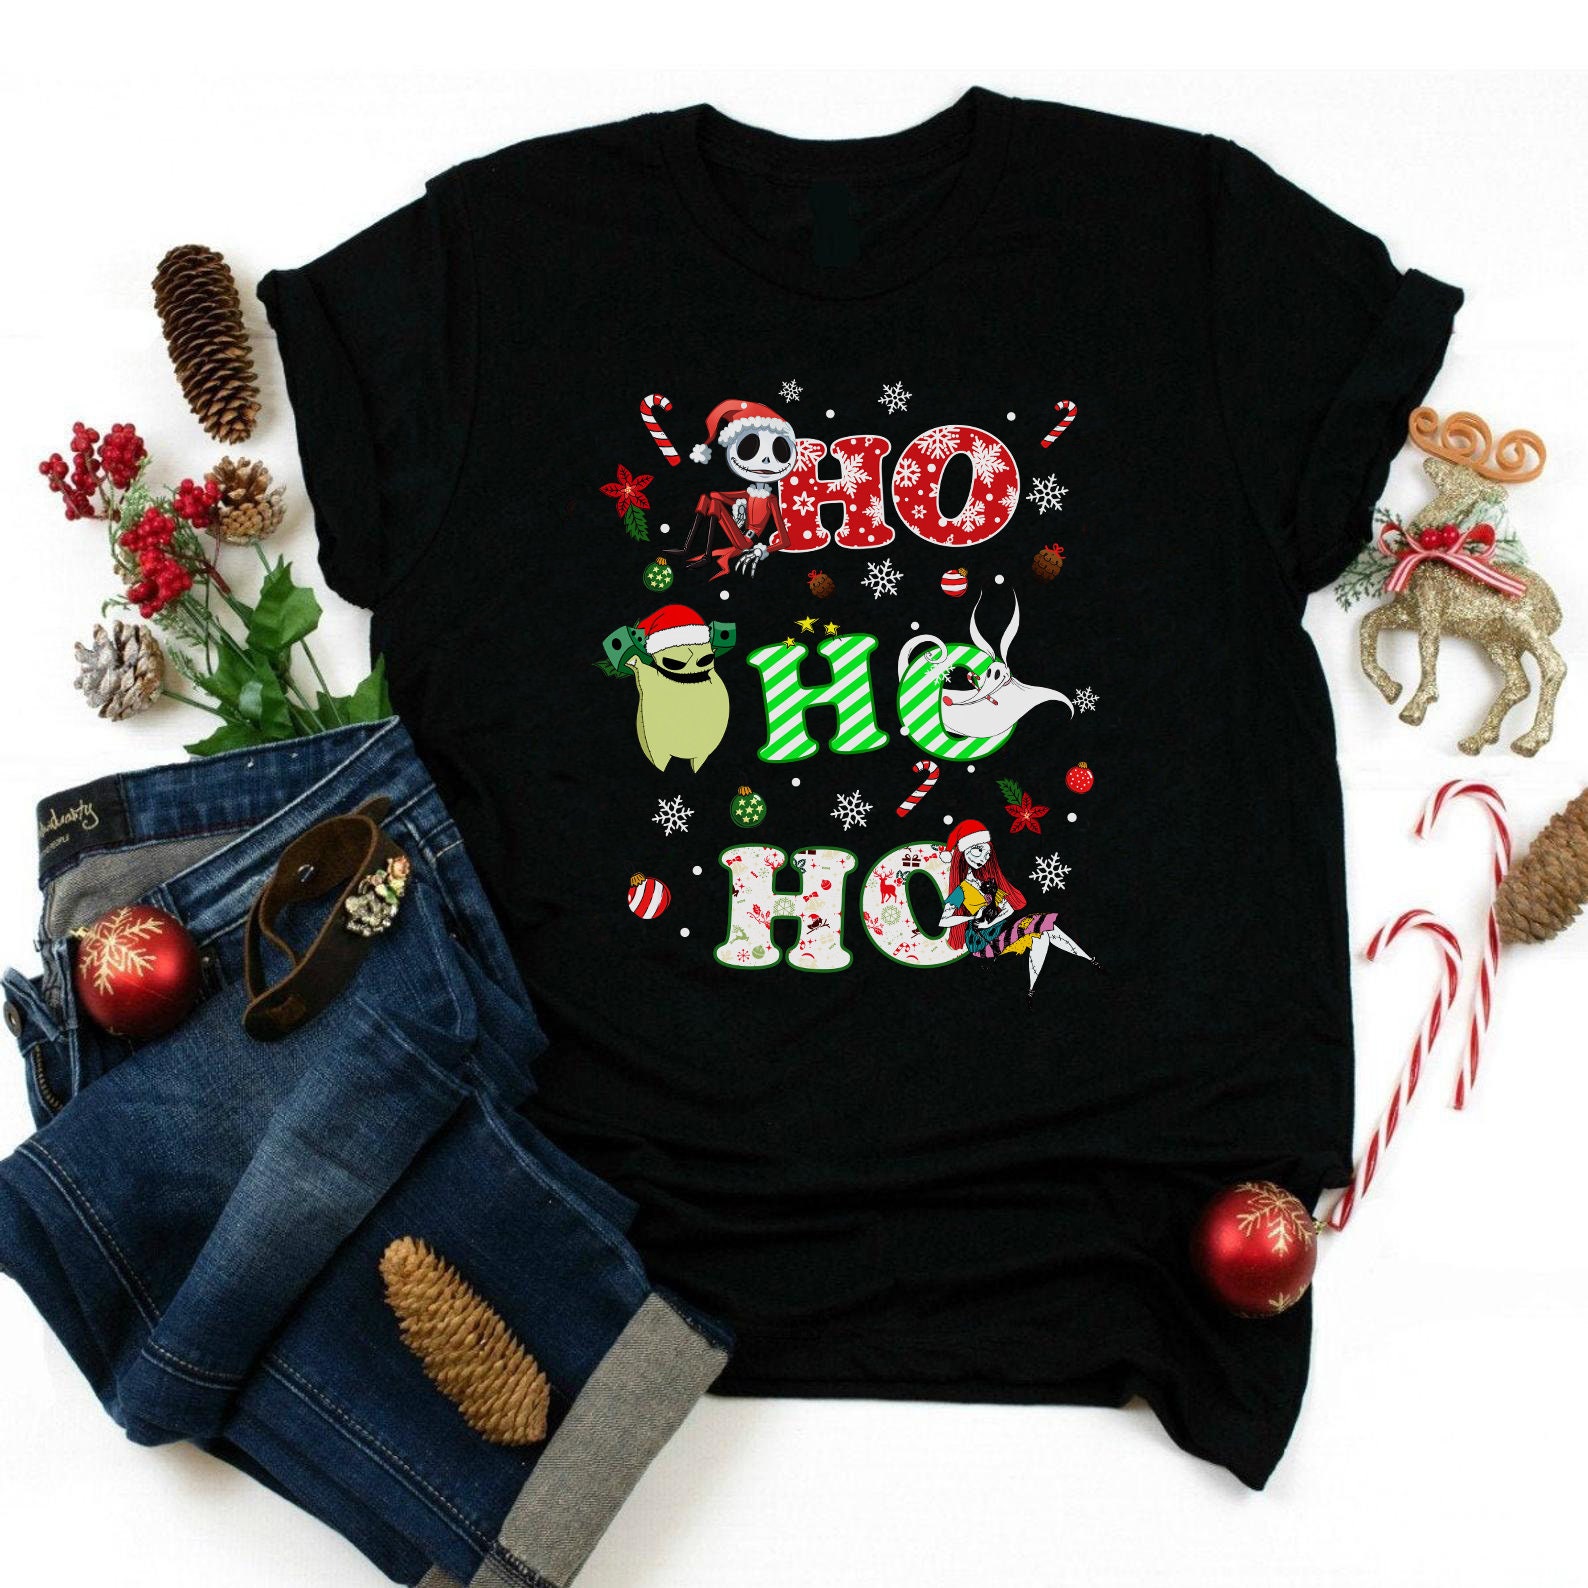 Discover Ho Ho Ho The Nightmare Before Christmas Shirt, Disney Christmas Sweatshirt